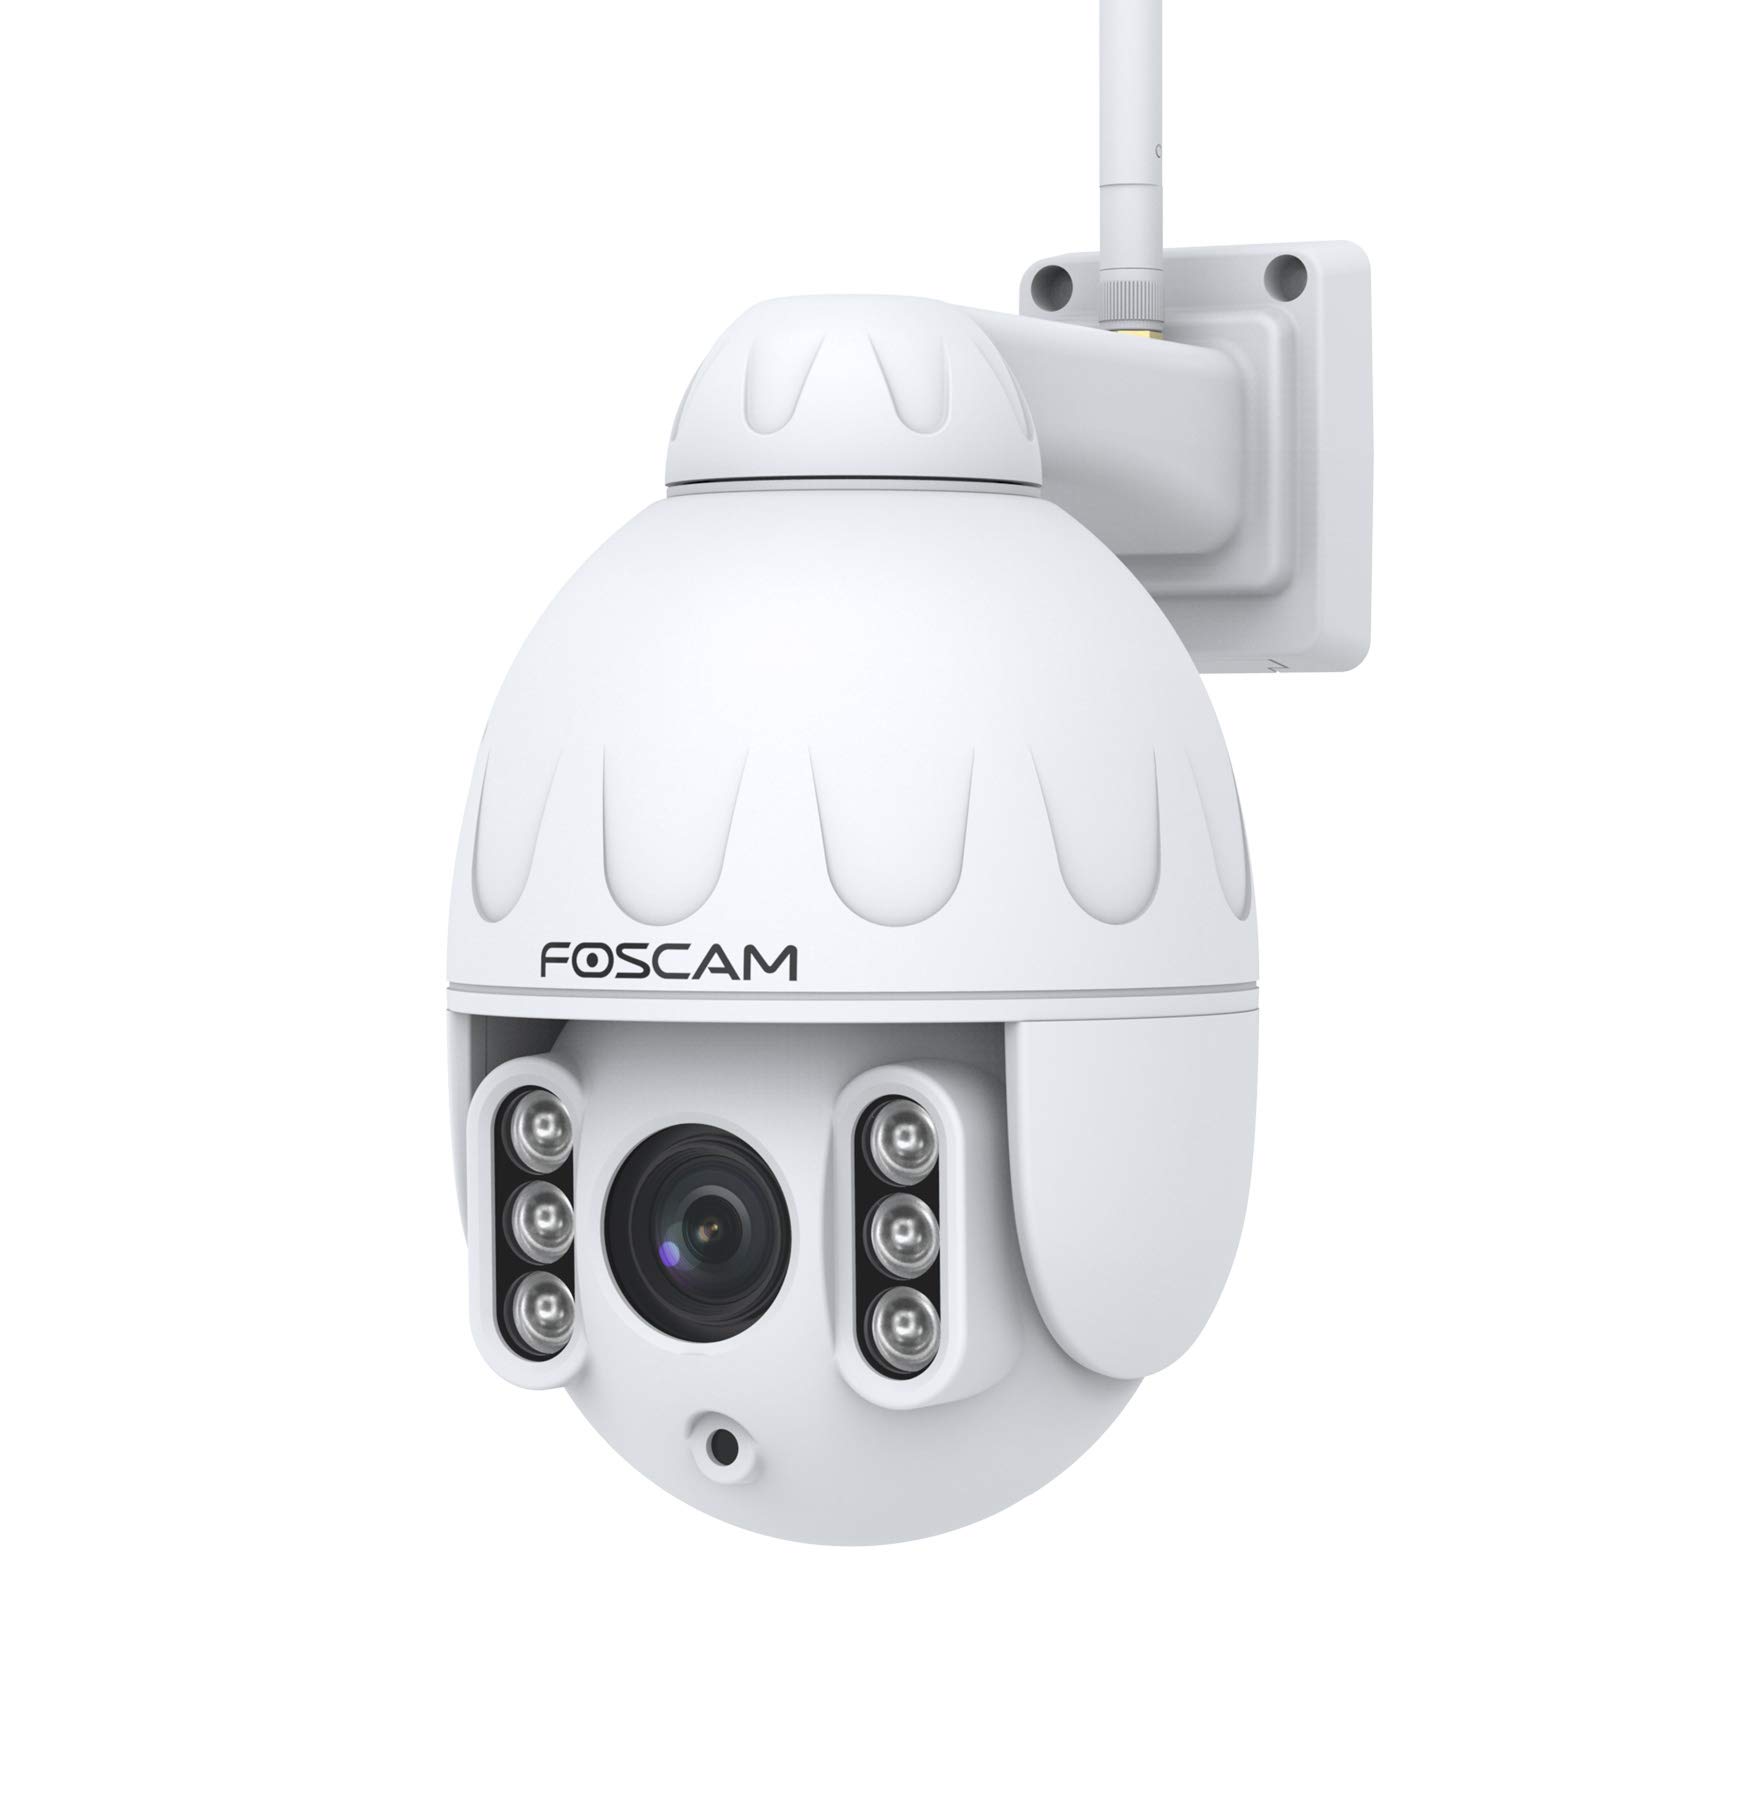 Foscam SD4 fscsd4 WLAN IP Überwachungskamera 2304 x 1536 Pixel, 20 W, 12 V, Multicolor, 1 Stück (1er Pack)